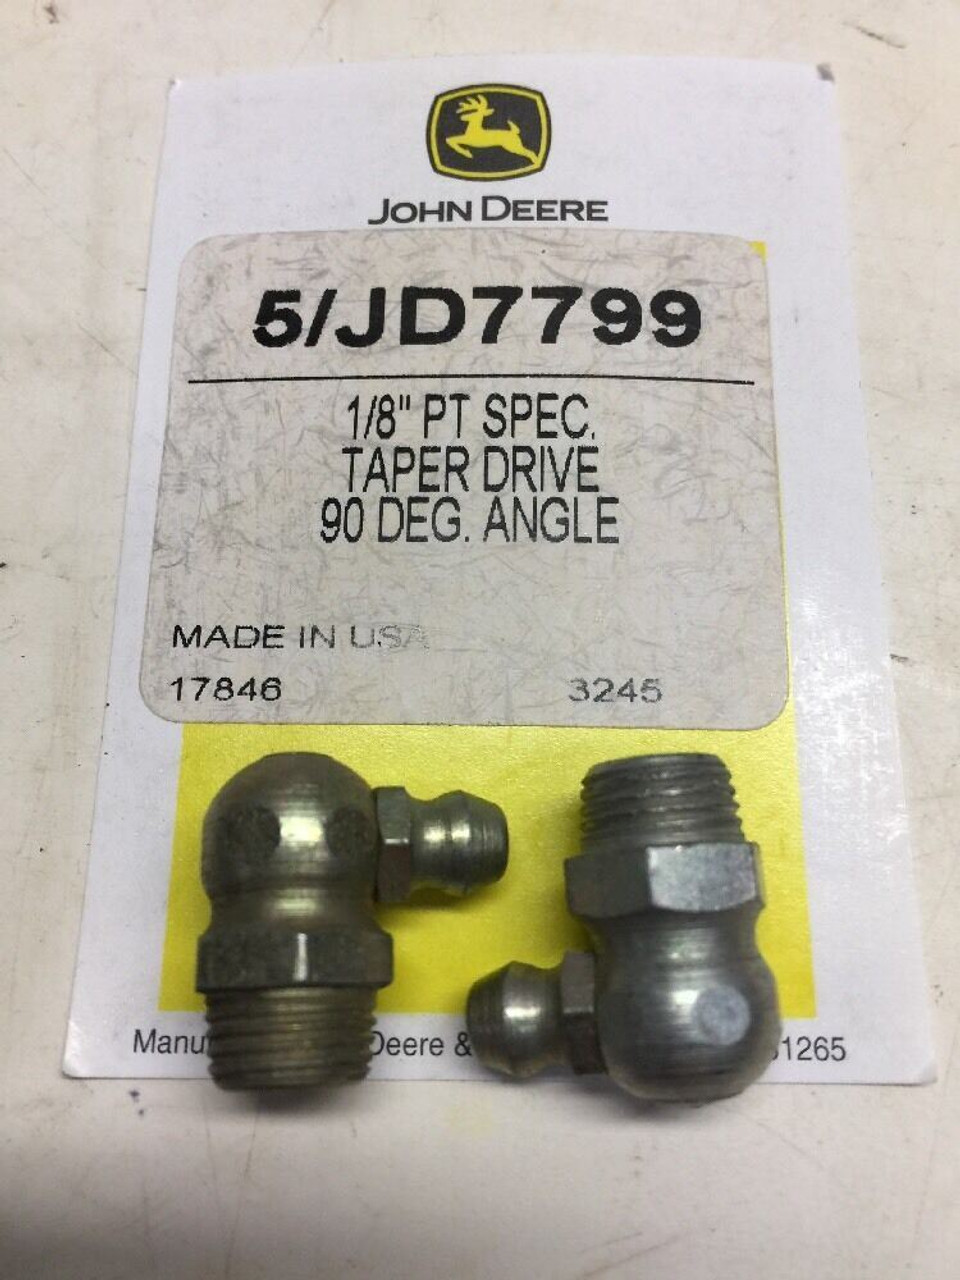 John Deere Taper Drive 1/8" PT Spec. 90 Degree Angle Lot of 50 